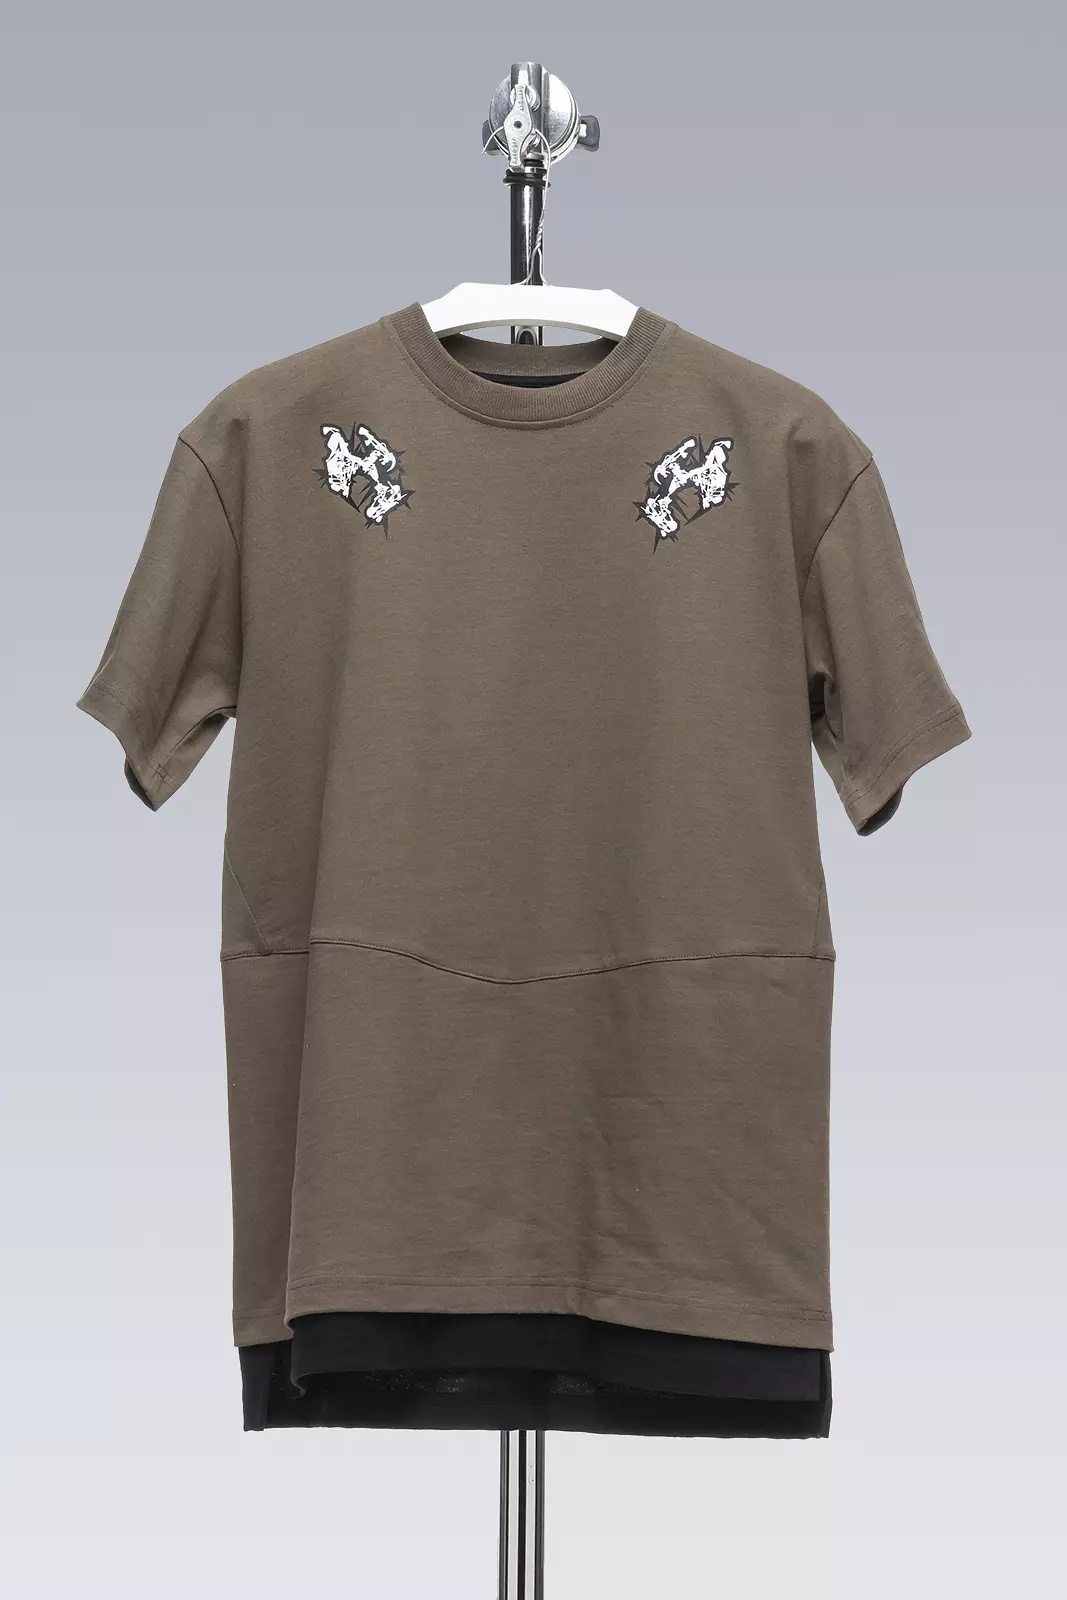 S28-PR-A 100% Orgnaic Cotton Short Sleeve T-shirt RAF Green/Black - 1